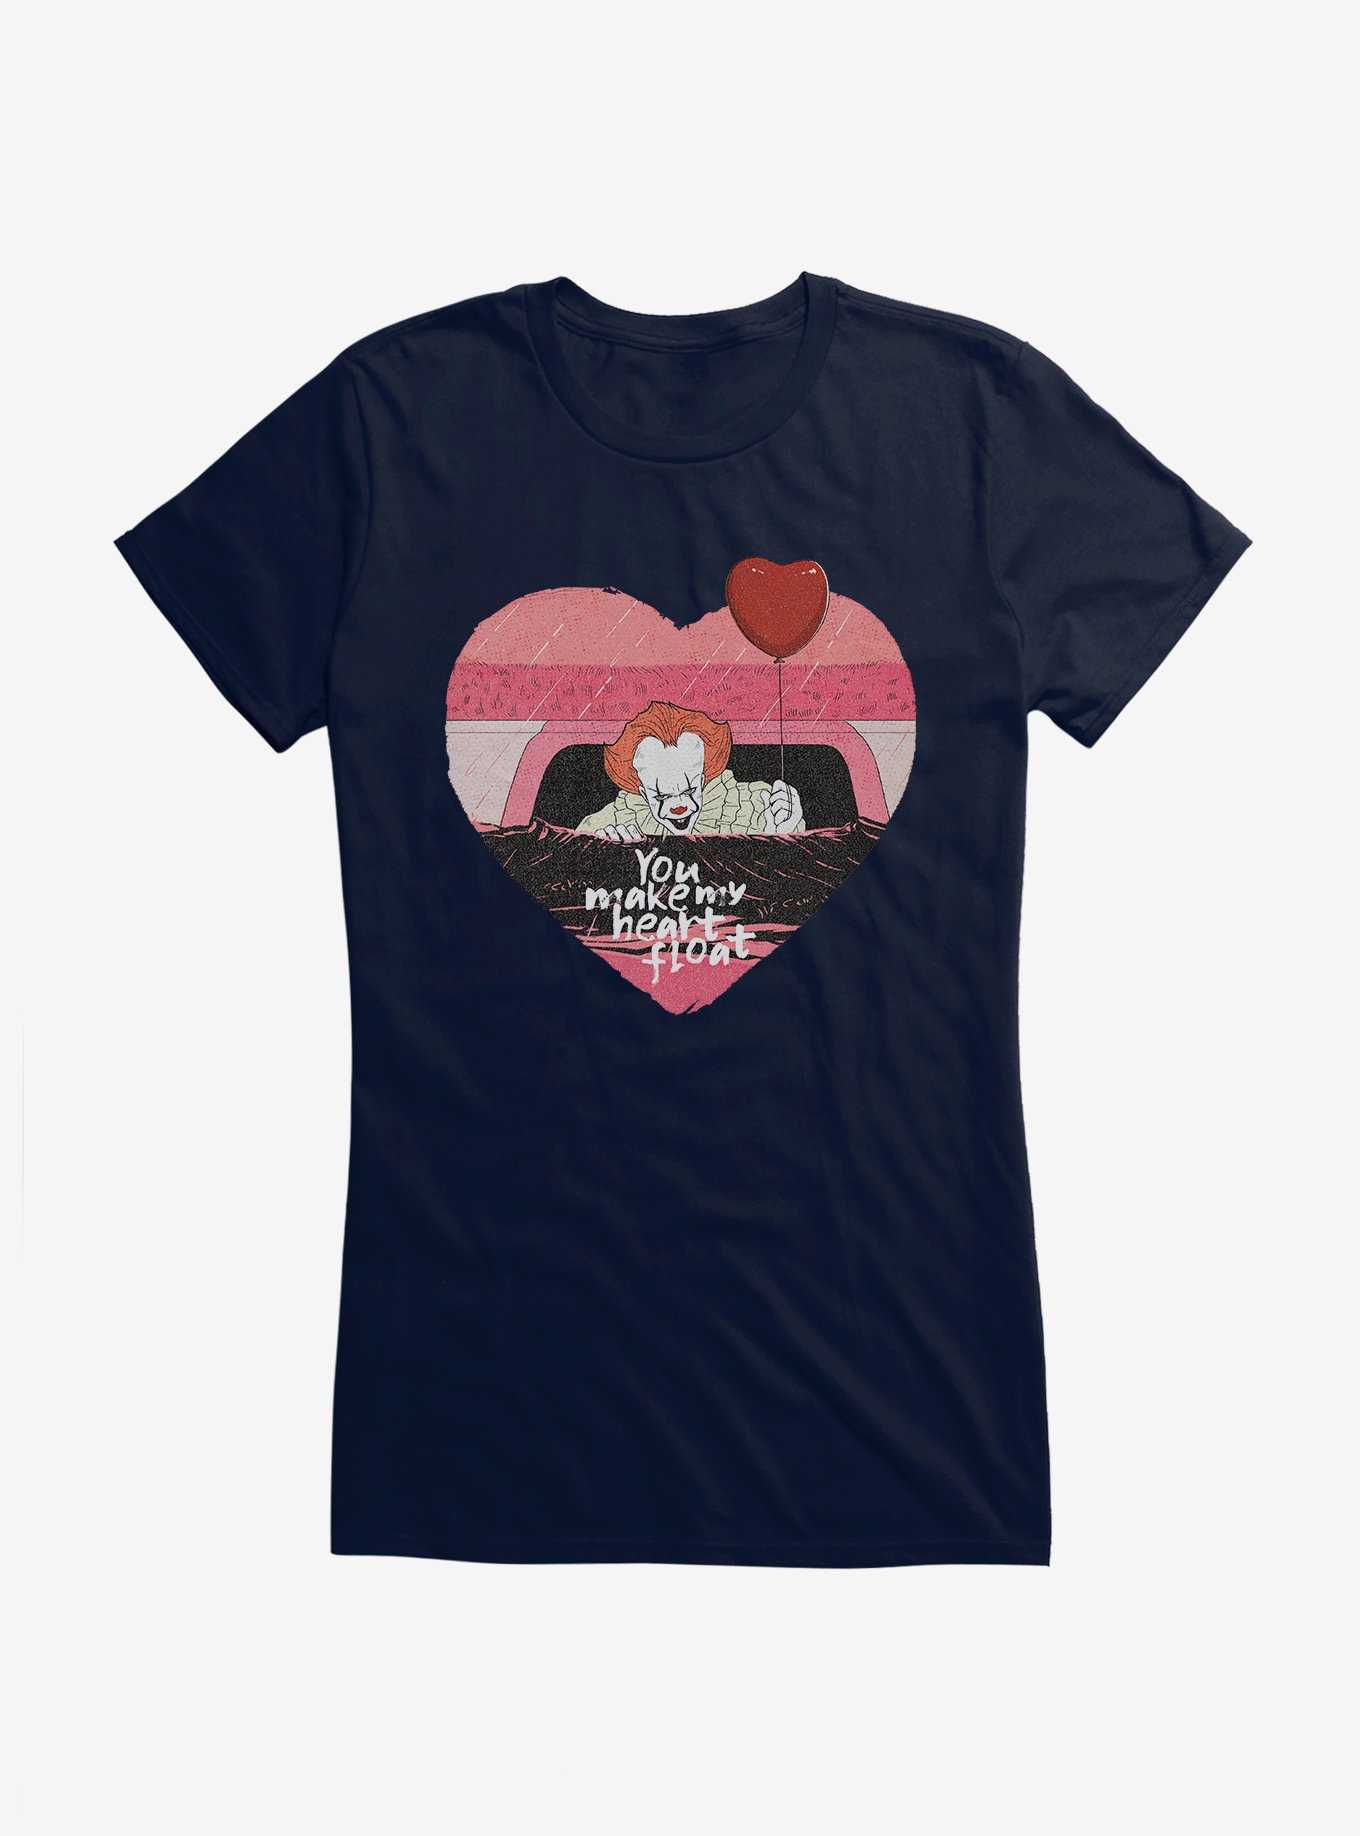 IT Heart Float Girls T-Shirt, NAVY, hi-res